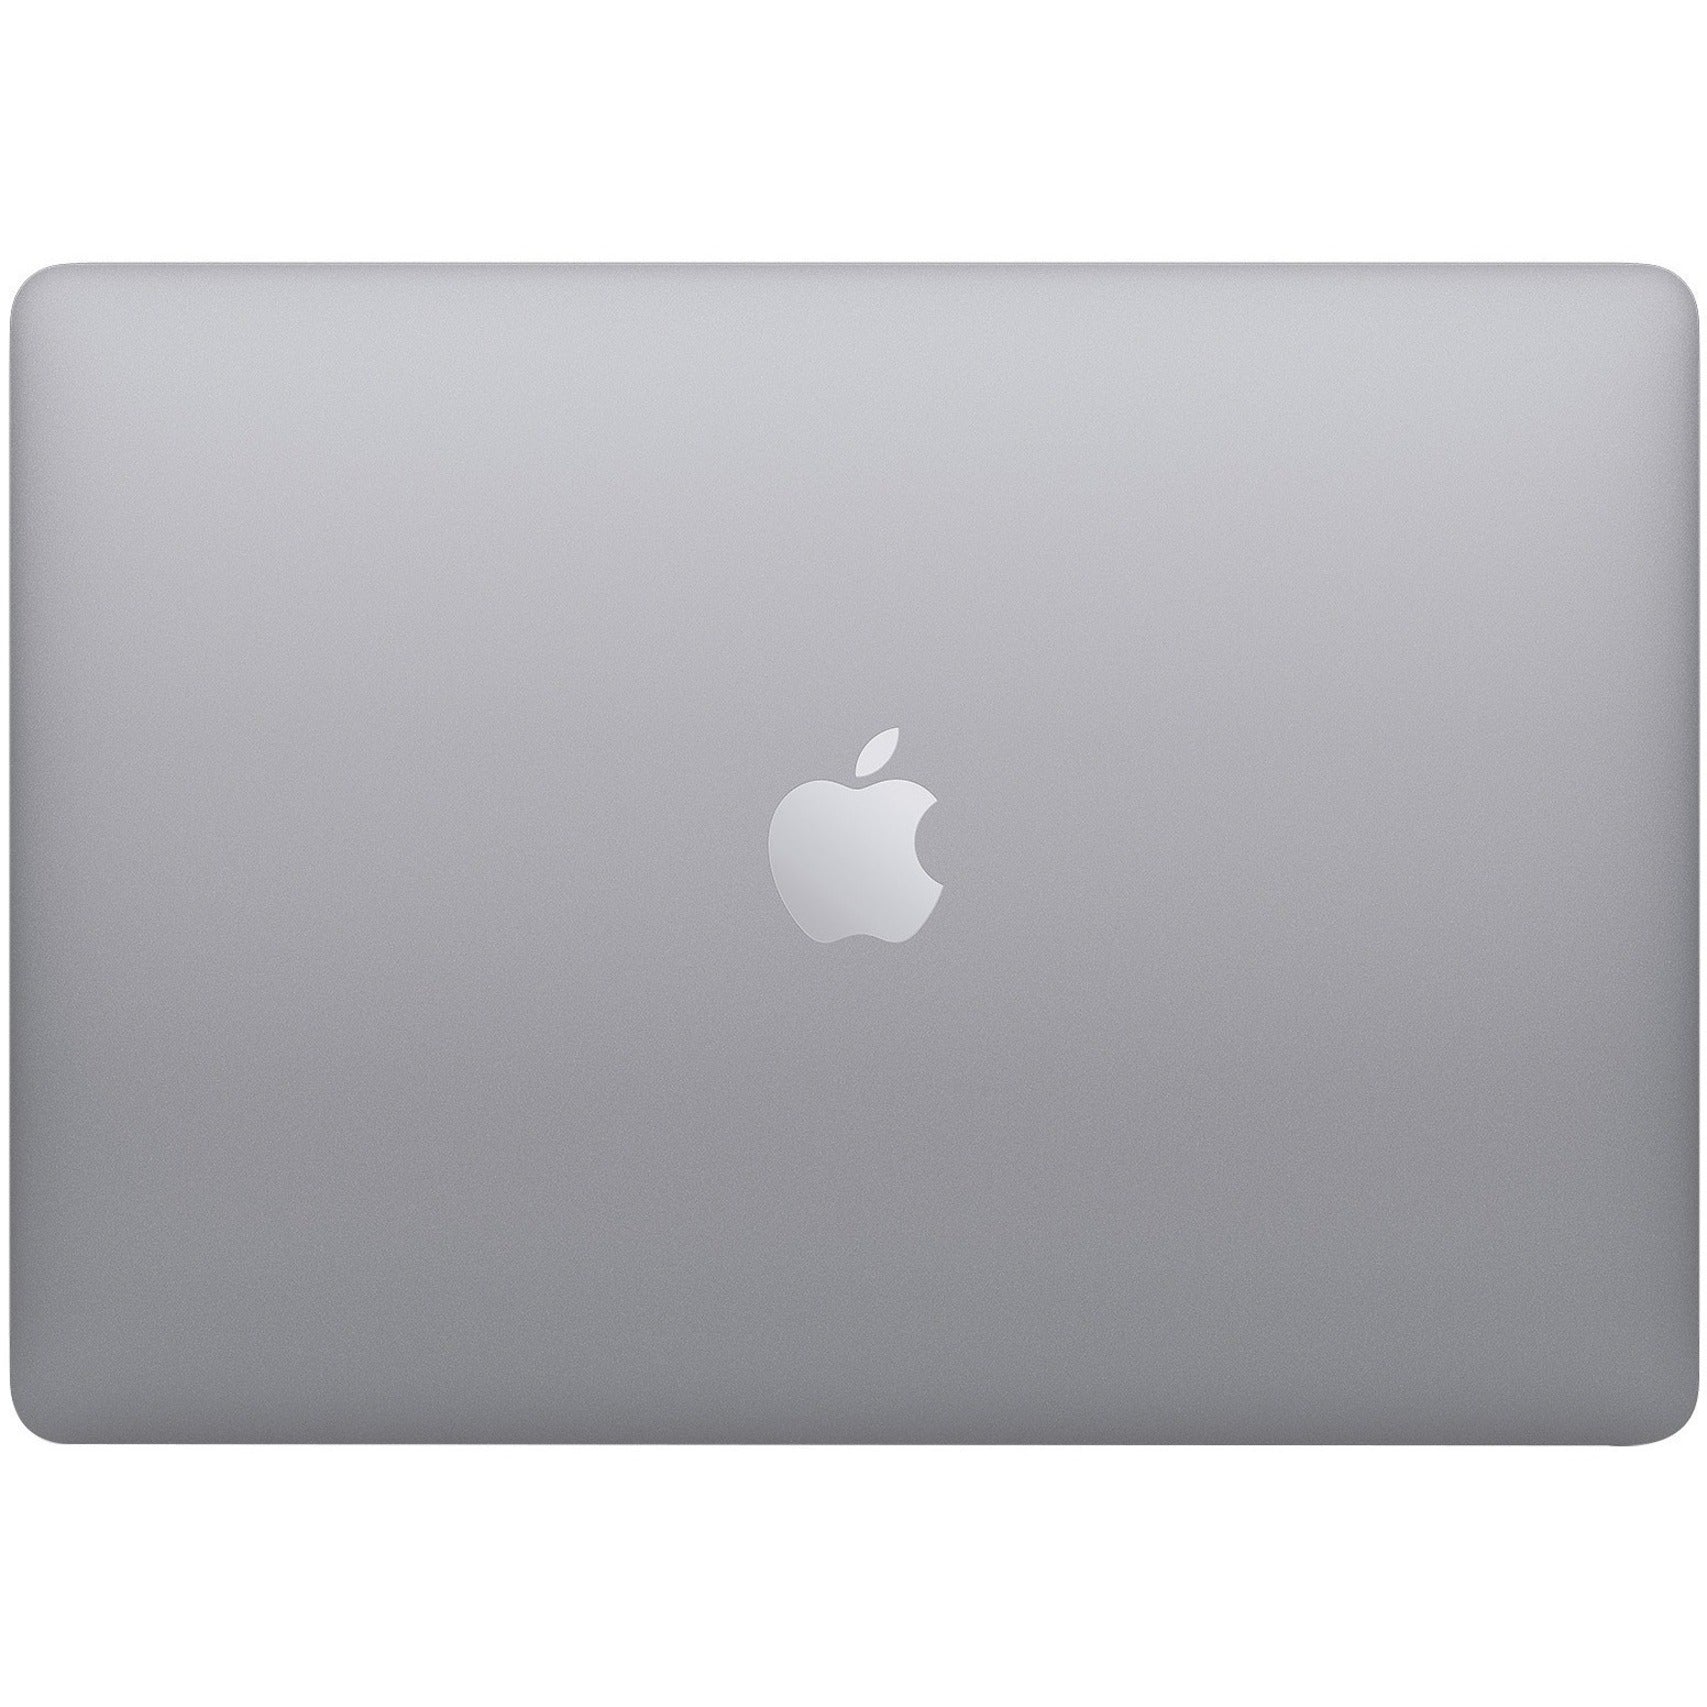 Apple MWTJ2LL/A MacBook Air 13-inch, 1.1GHz 10th Gen Intel Core i3, 8GB RAM, 256GB SSD, Space Gray